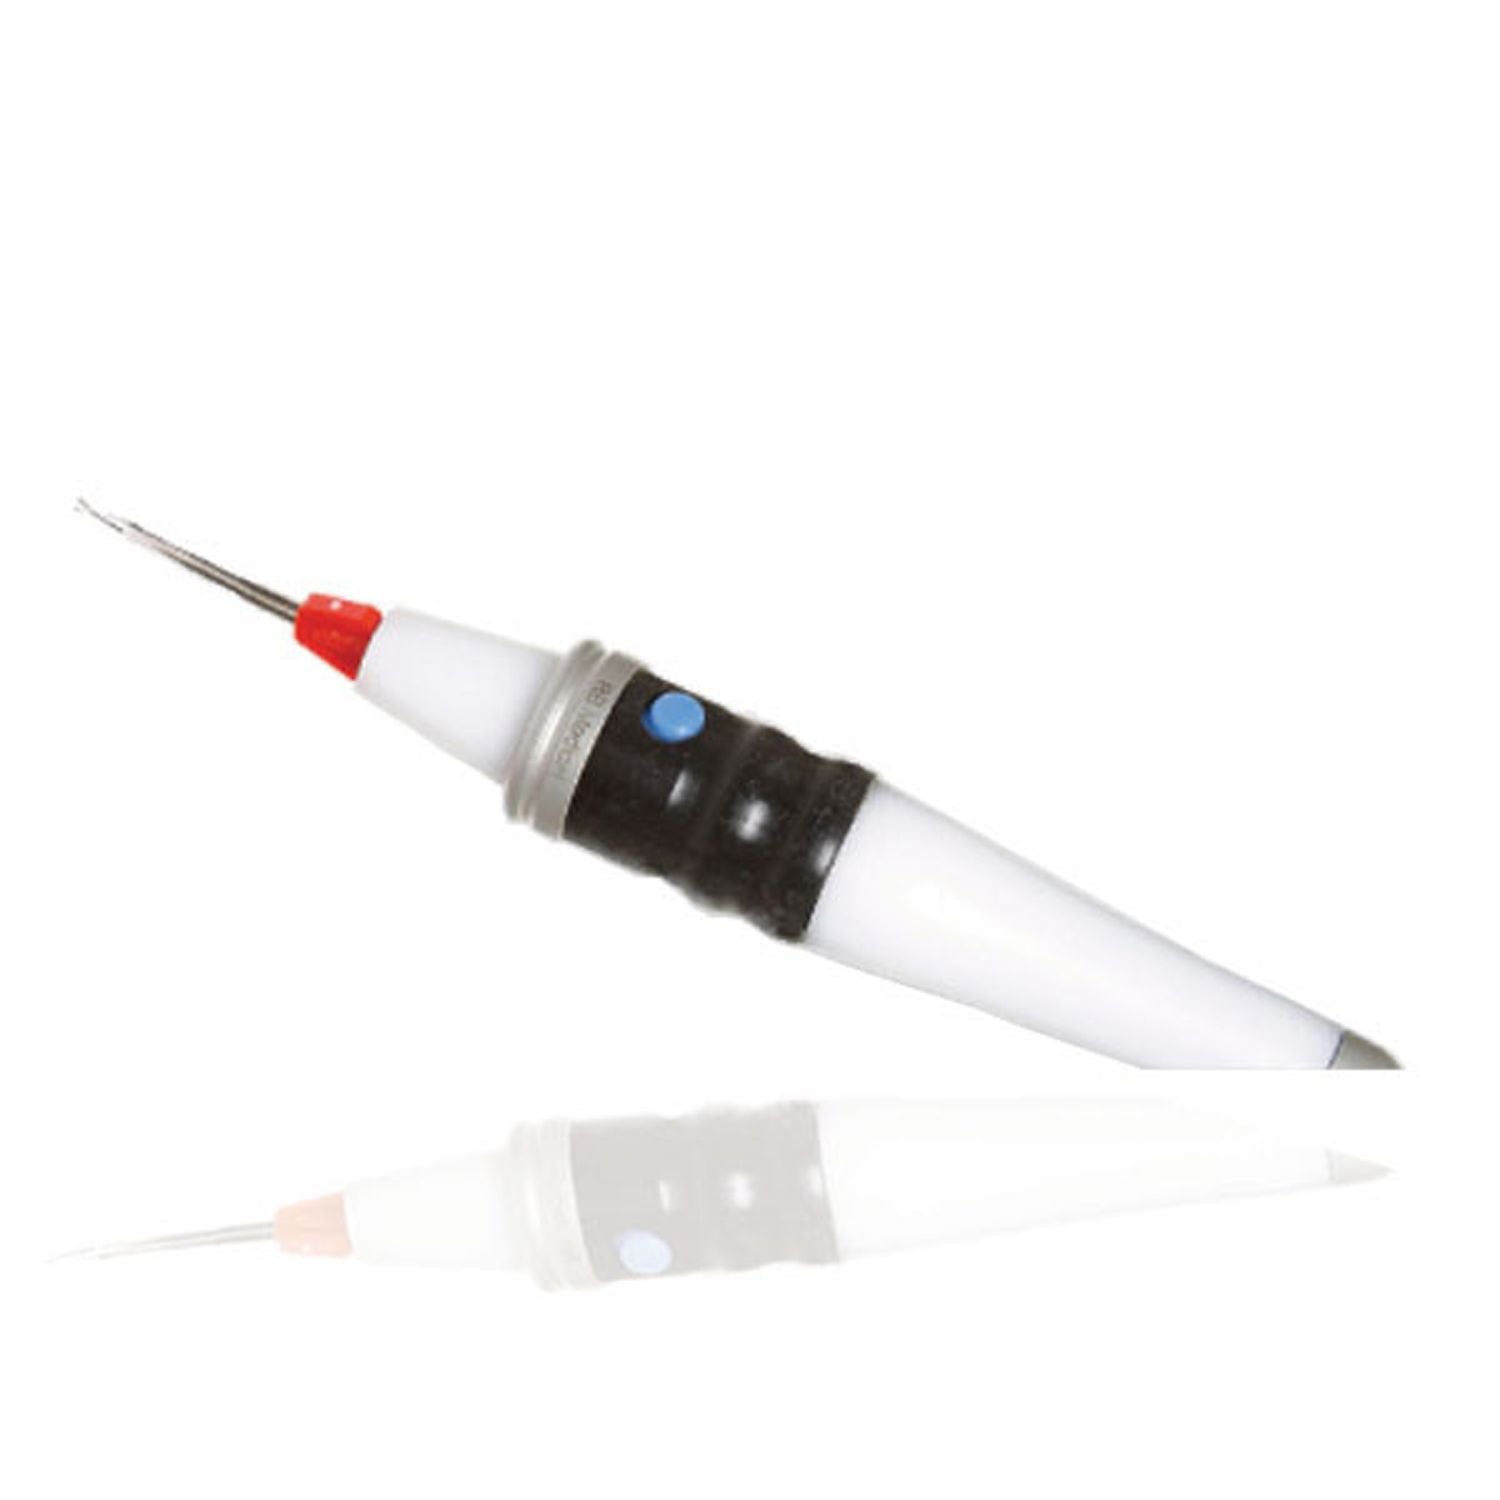 Light Duty Cautery Pen Grip Handle - Fixed, Shrouded Cable